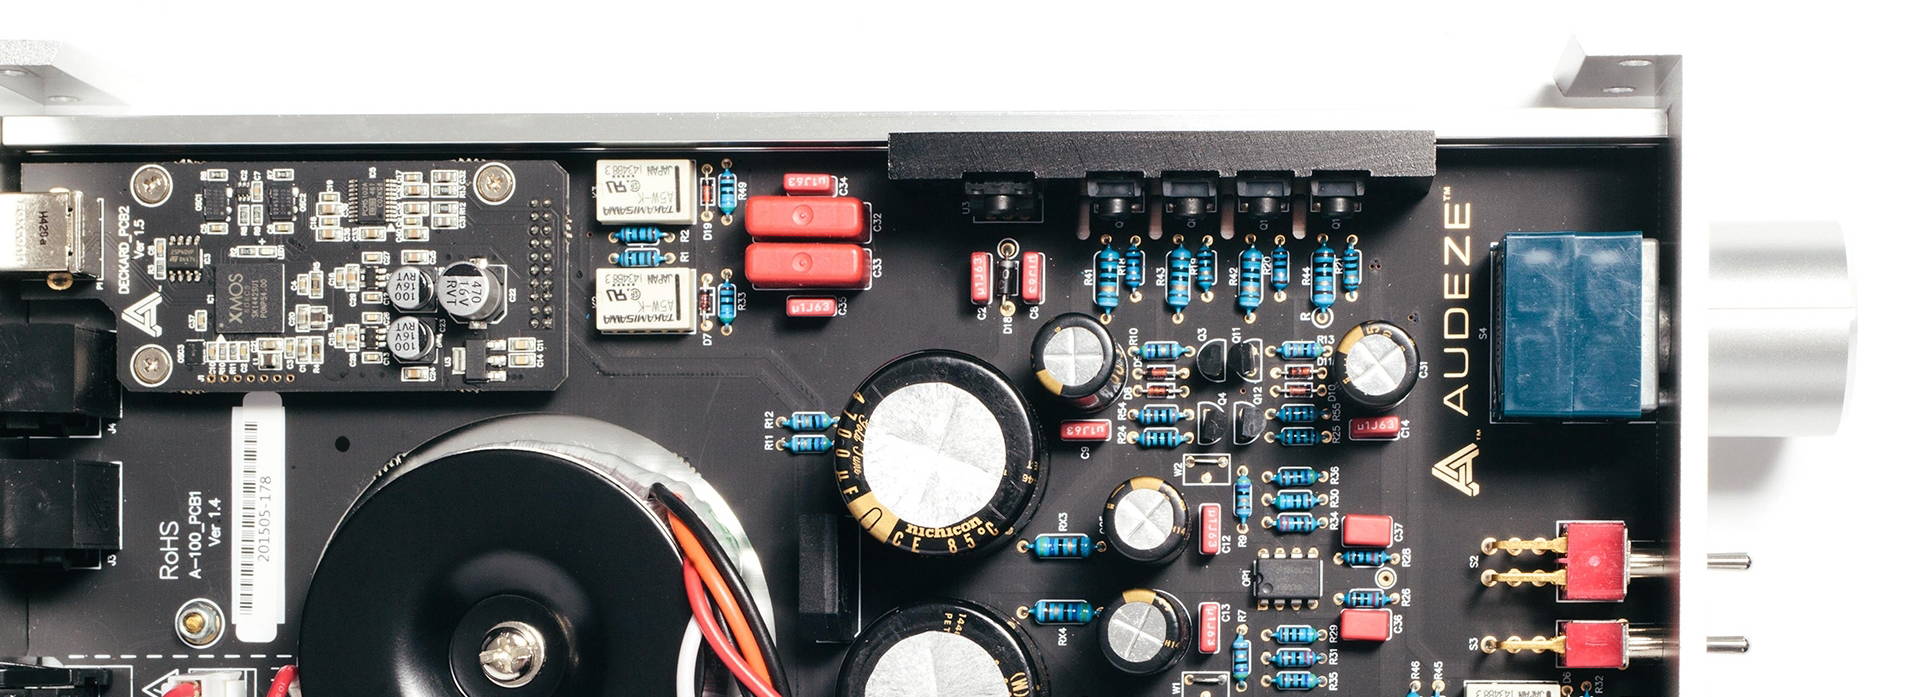 Deckard circuit board closeup